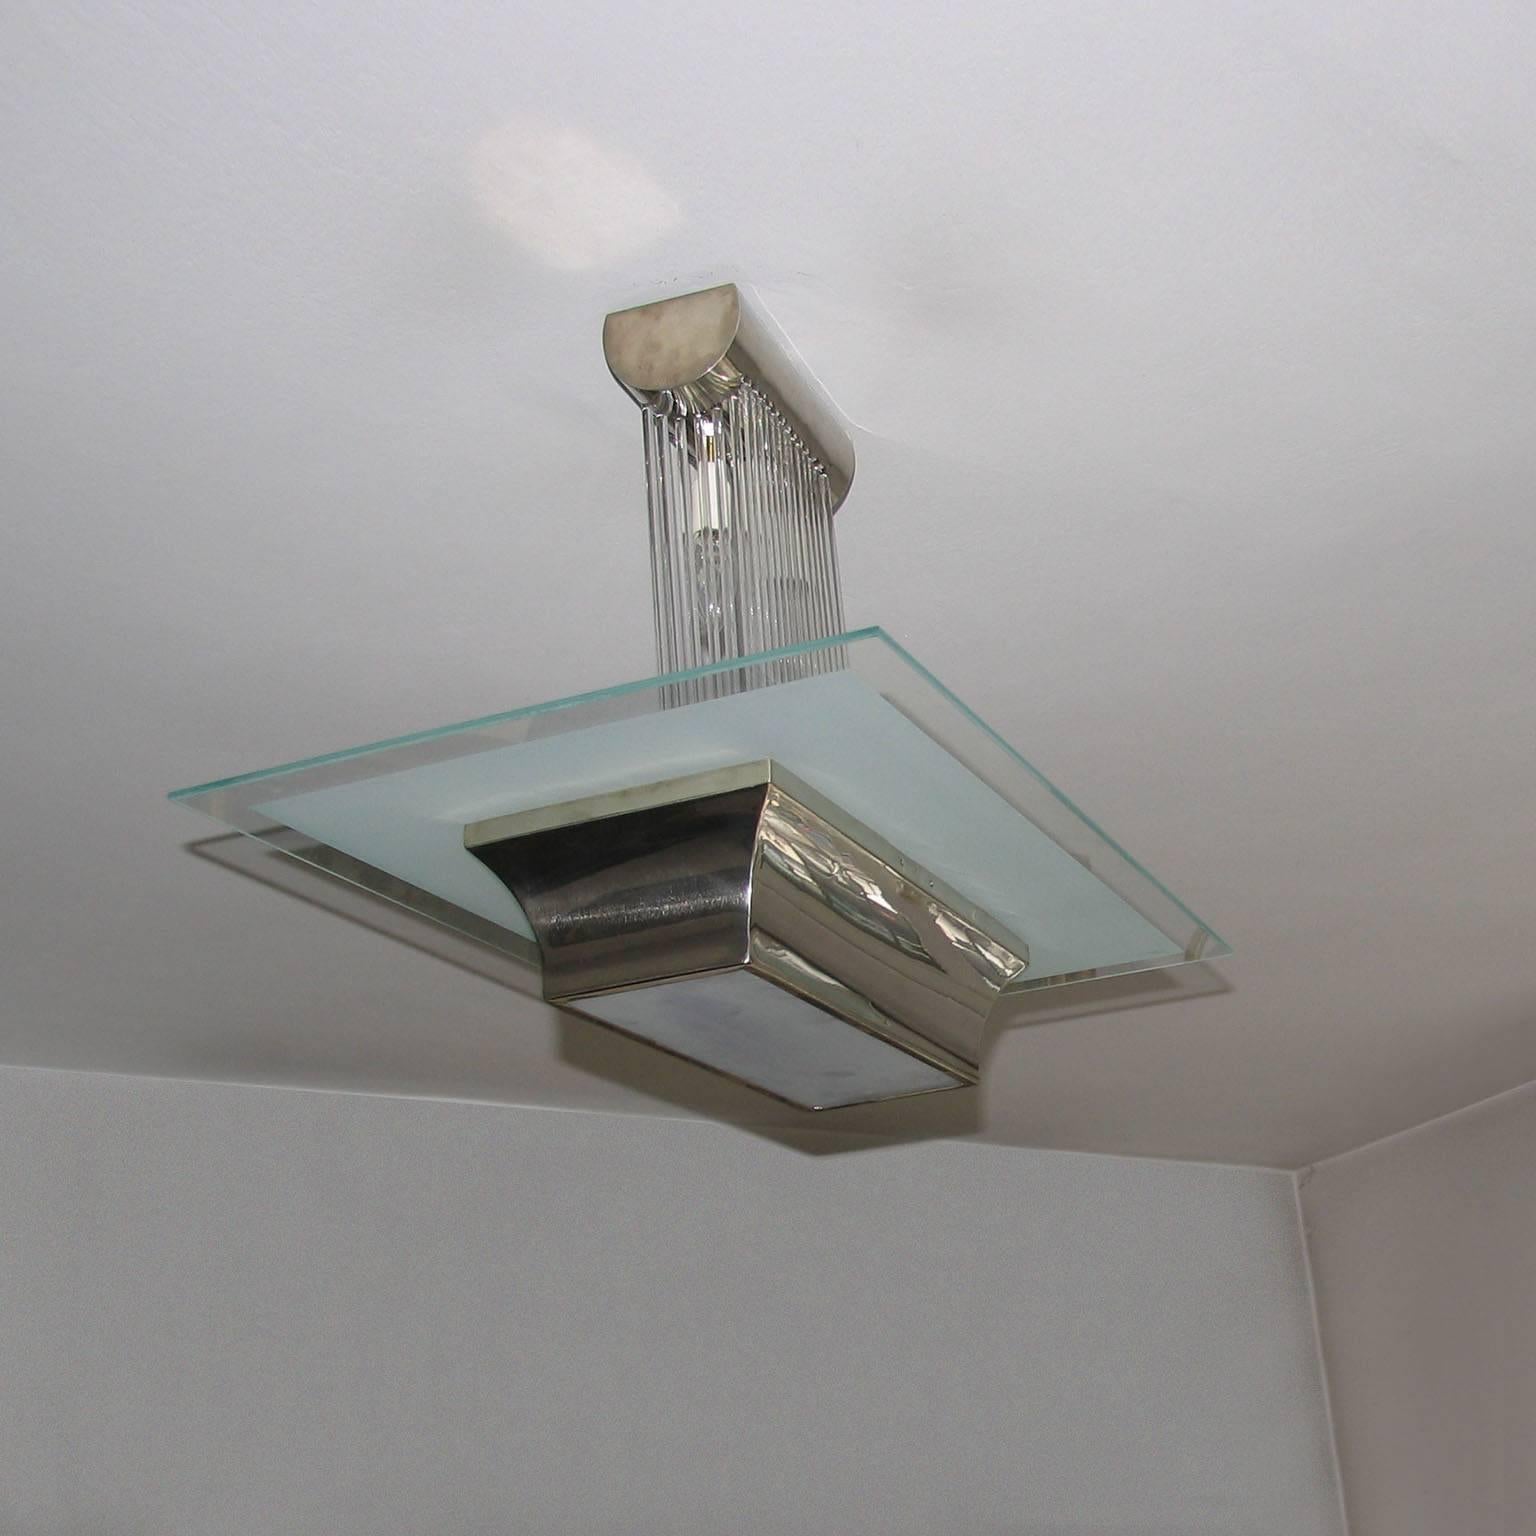 Modernist Art Deco Petitot Ceiling Light 1